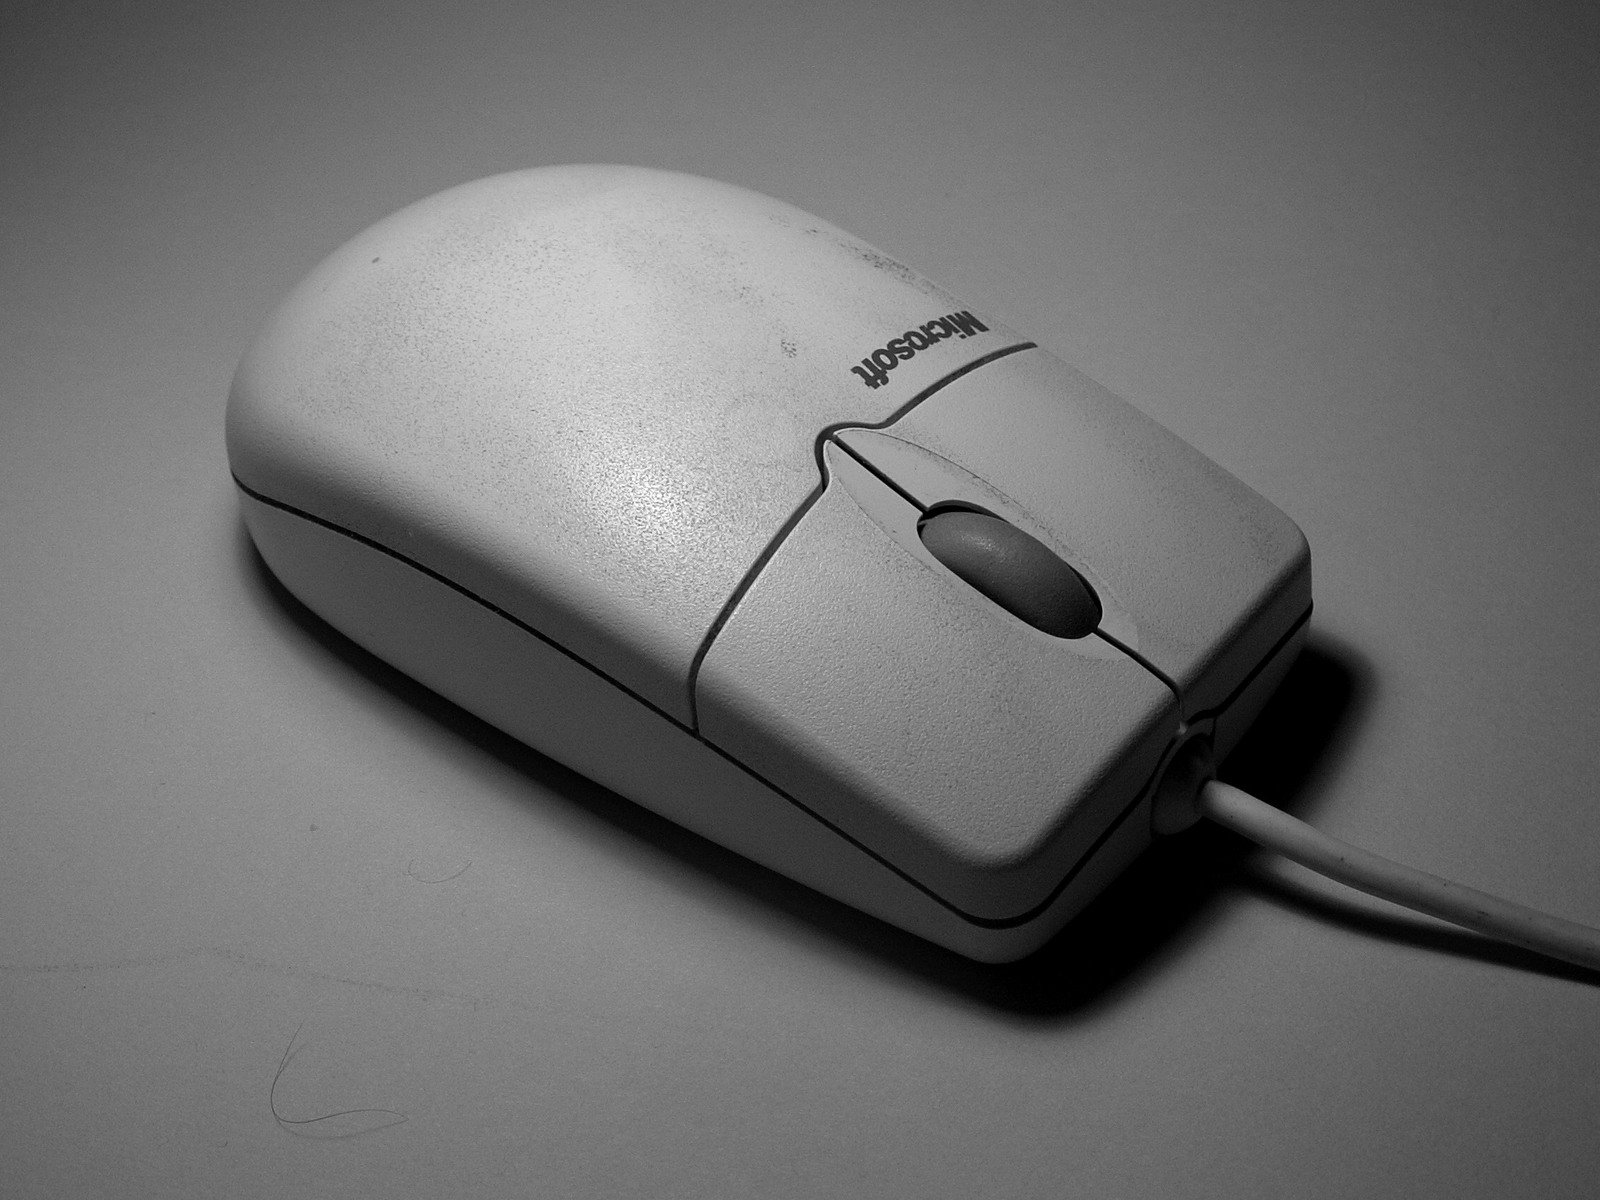 Microsoft mouse